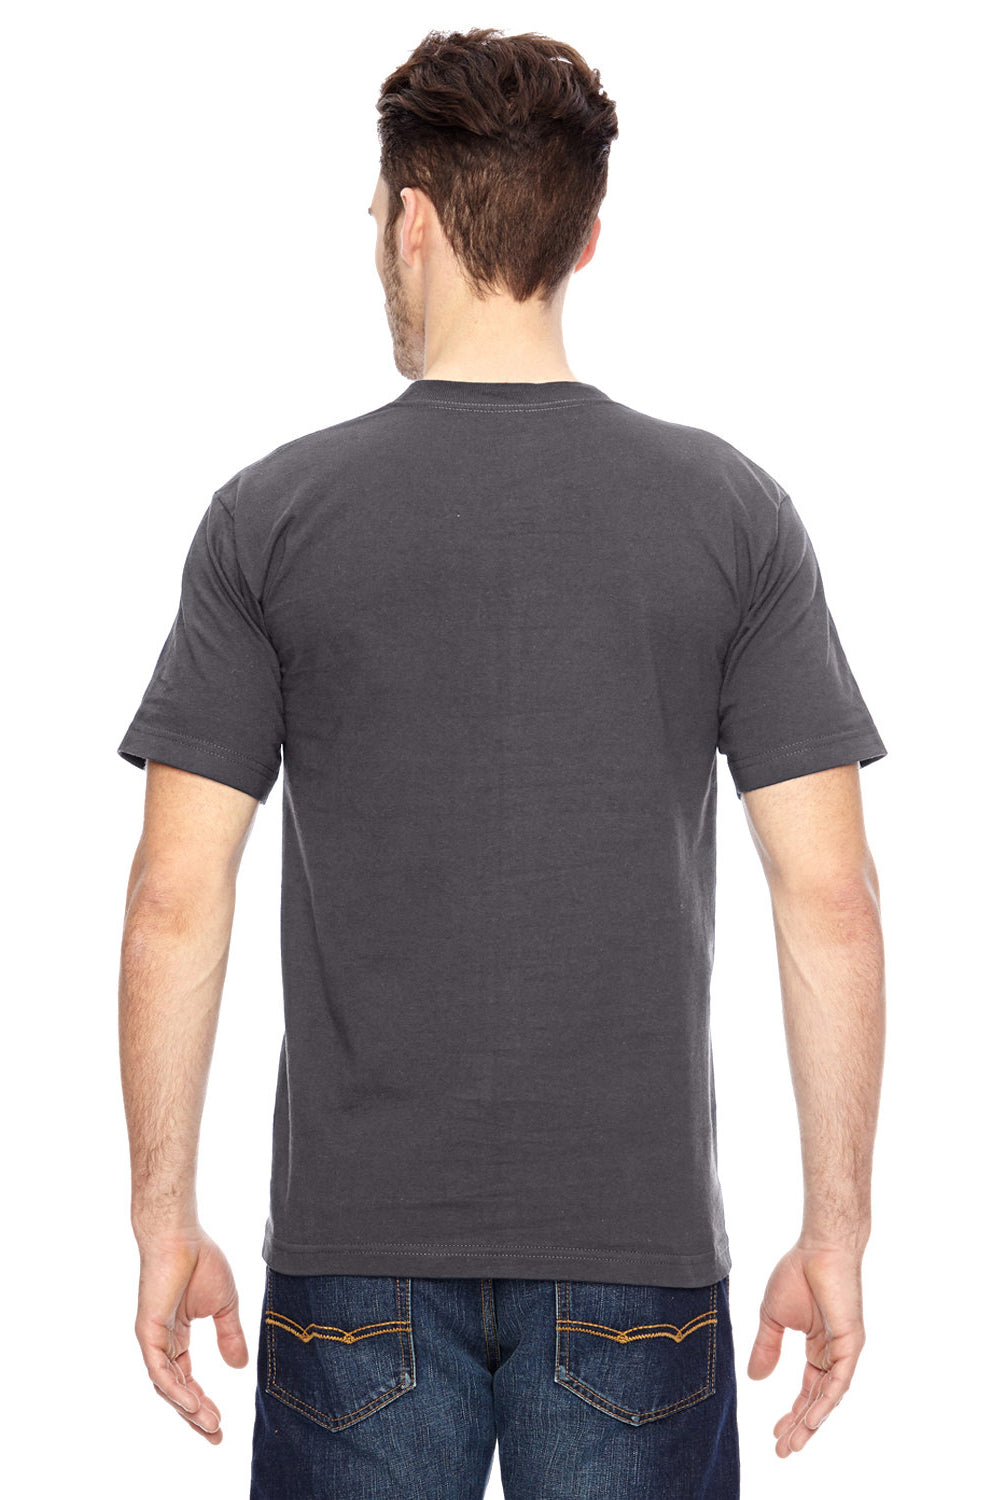 Bayside BA7100 Mens USA Made Short Sleeve Crewneck T-Shirt w/ Pocket Charcoal Grey Model Back